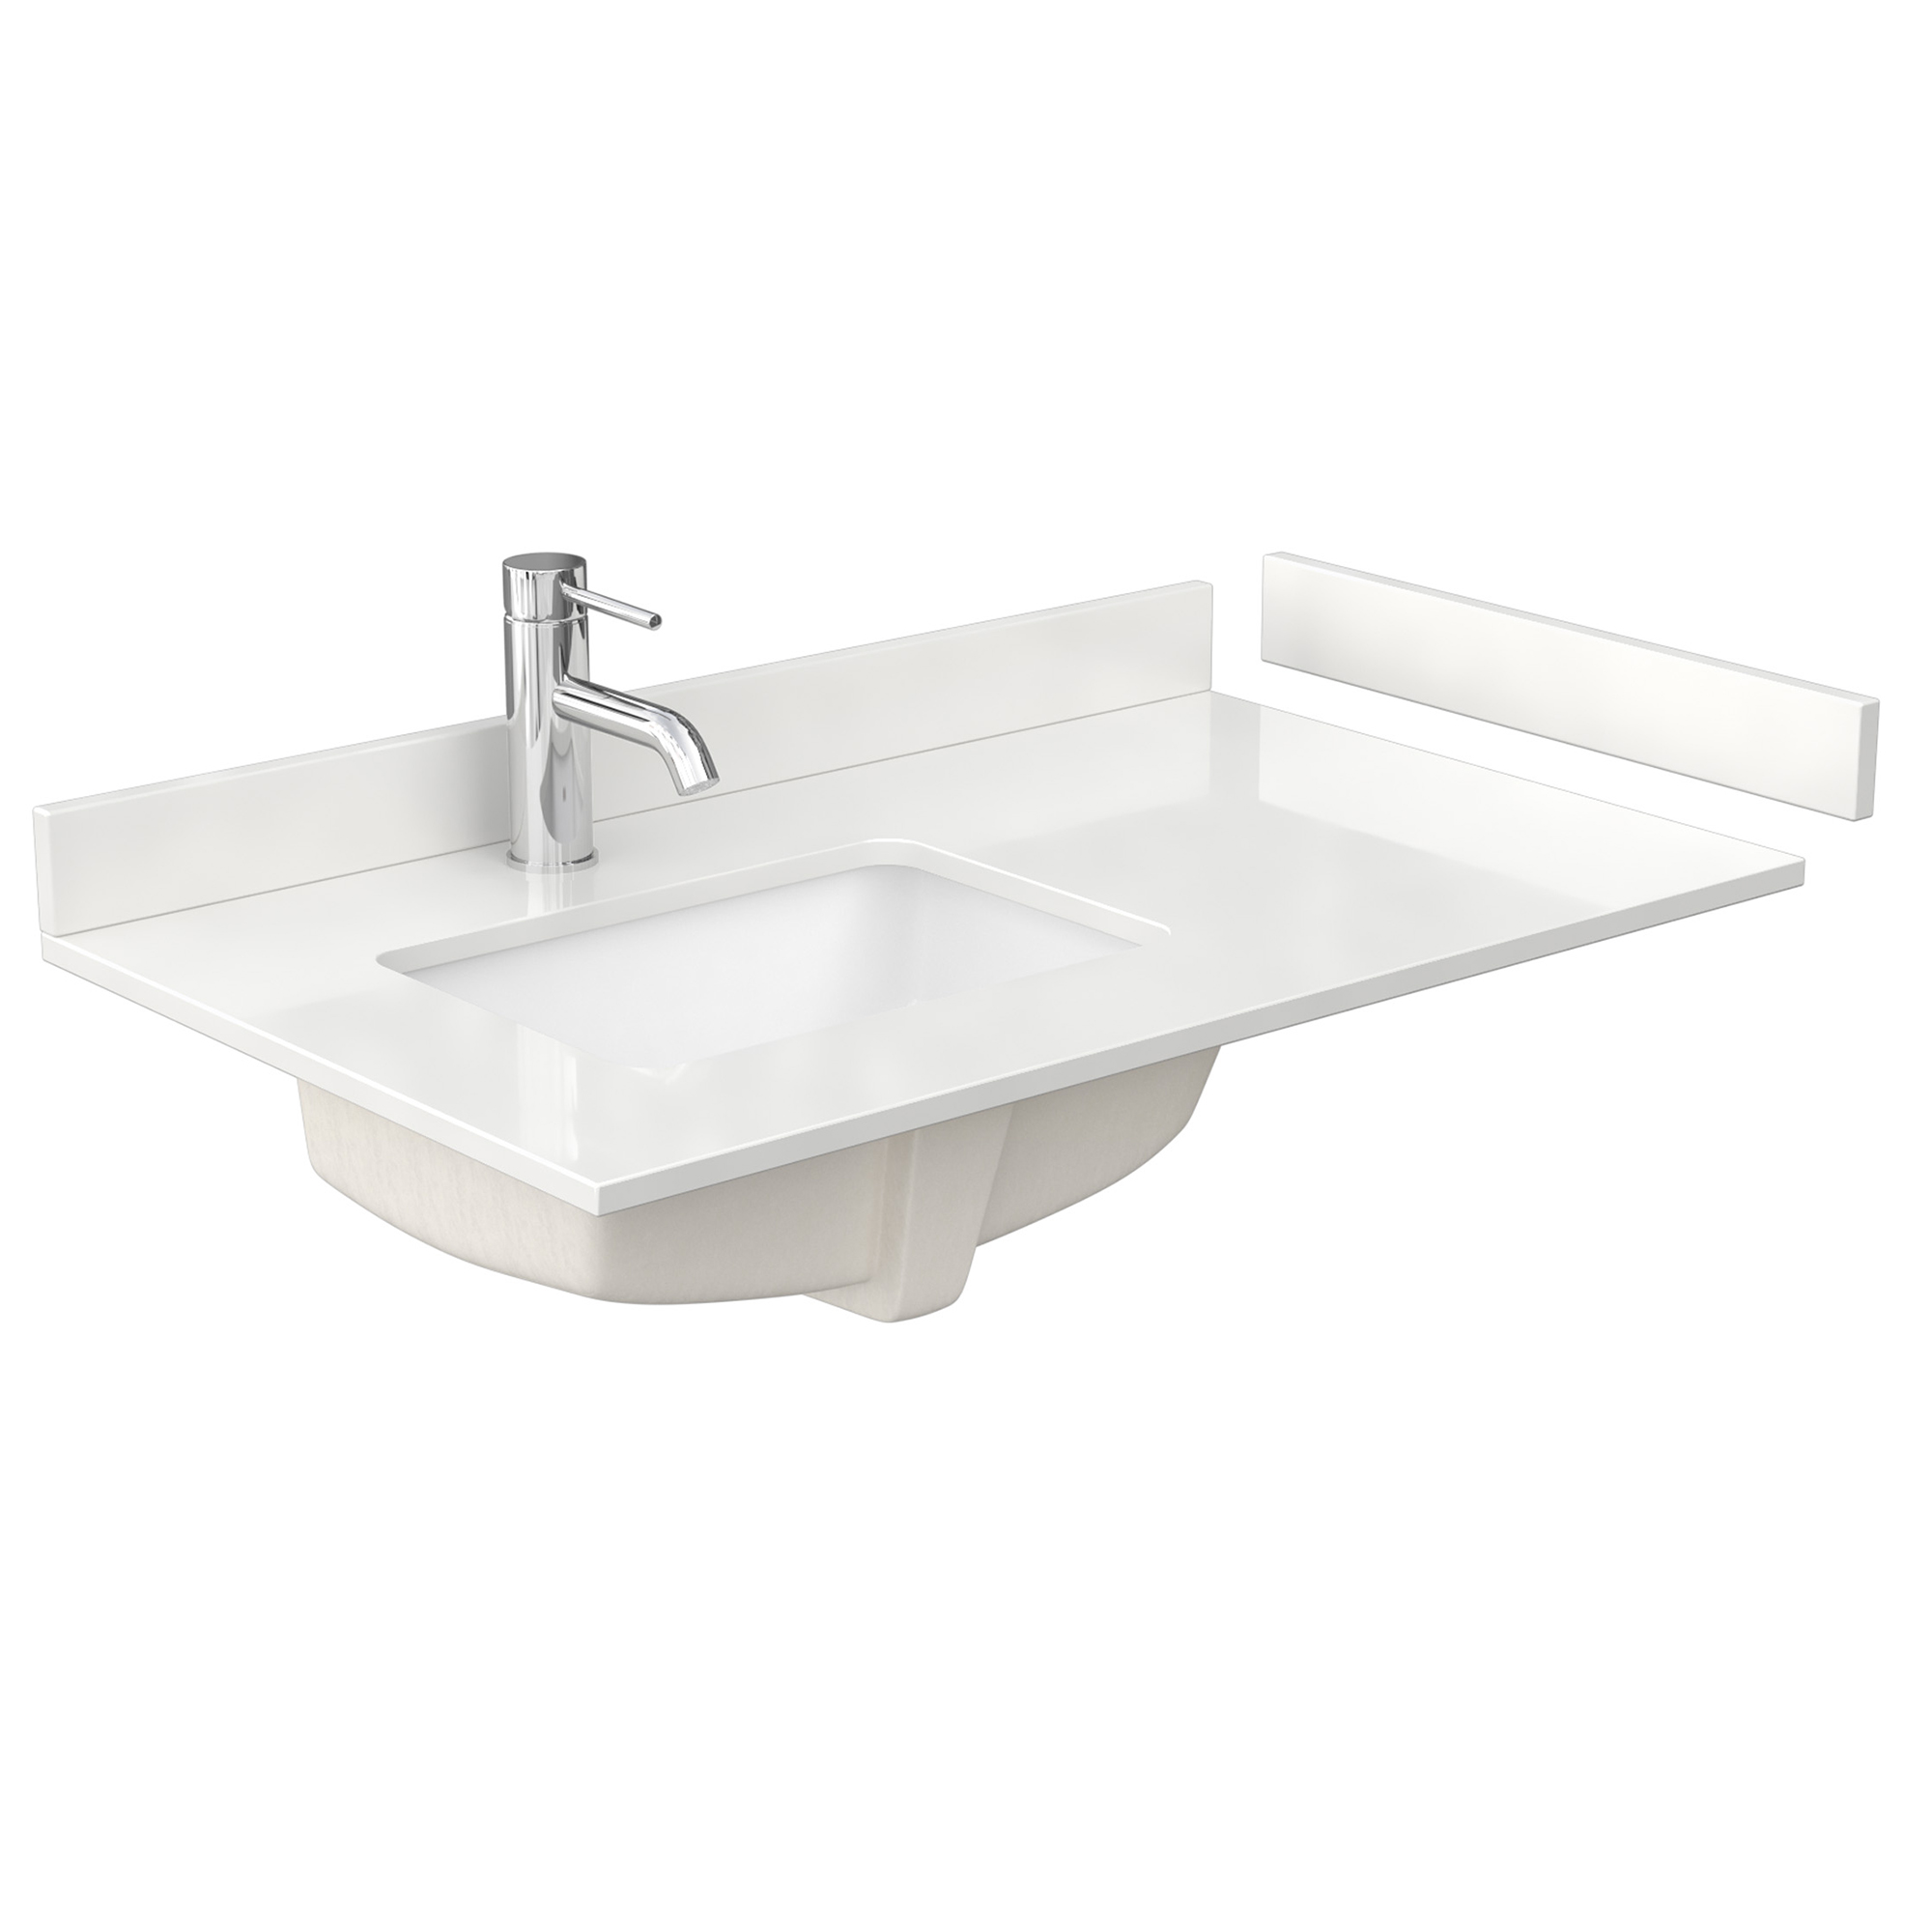 36" Single Countertop - White Quartz (1000) with Undermount Square Sink (1-Hole), Offset to Left - Includes Backsplash and Sidesplash WCFQCB36STOPUNSWQ